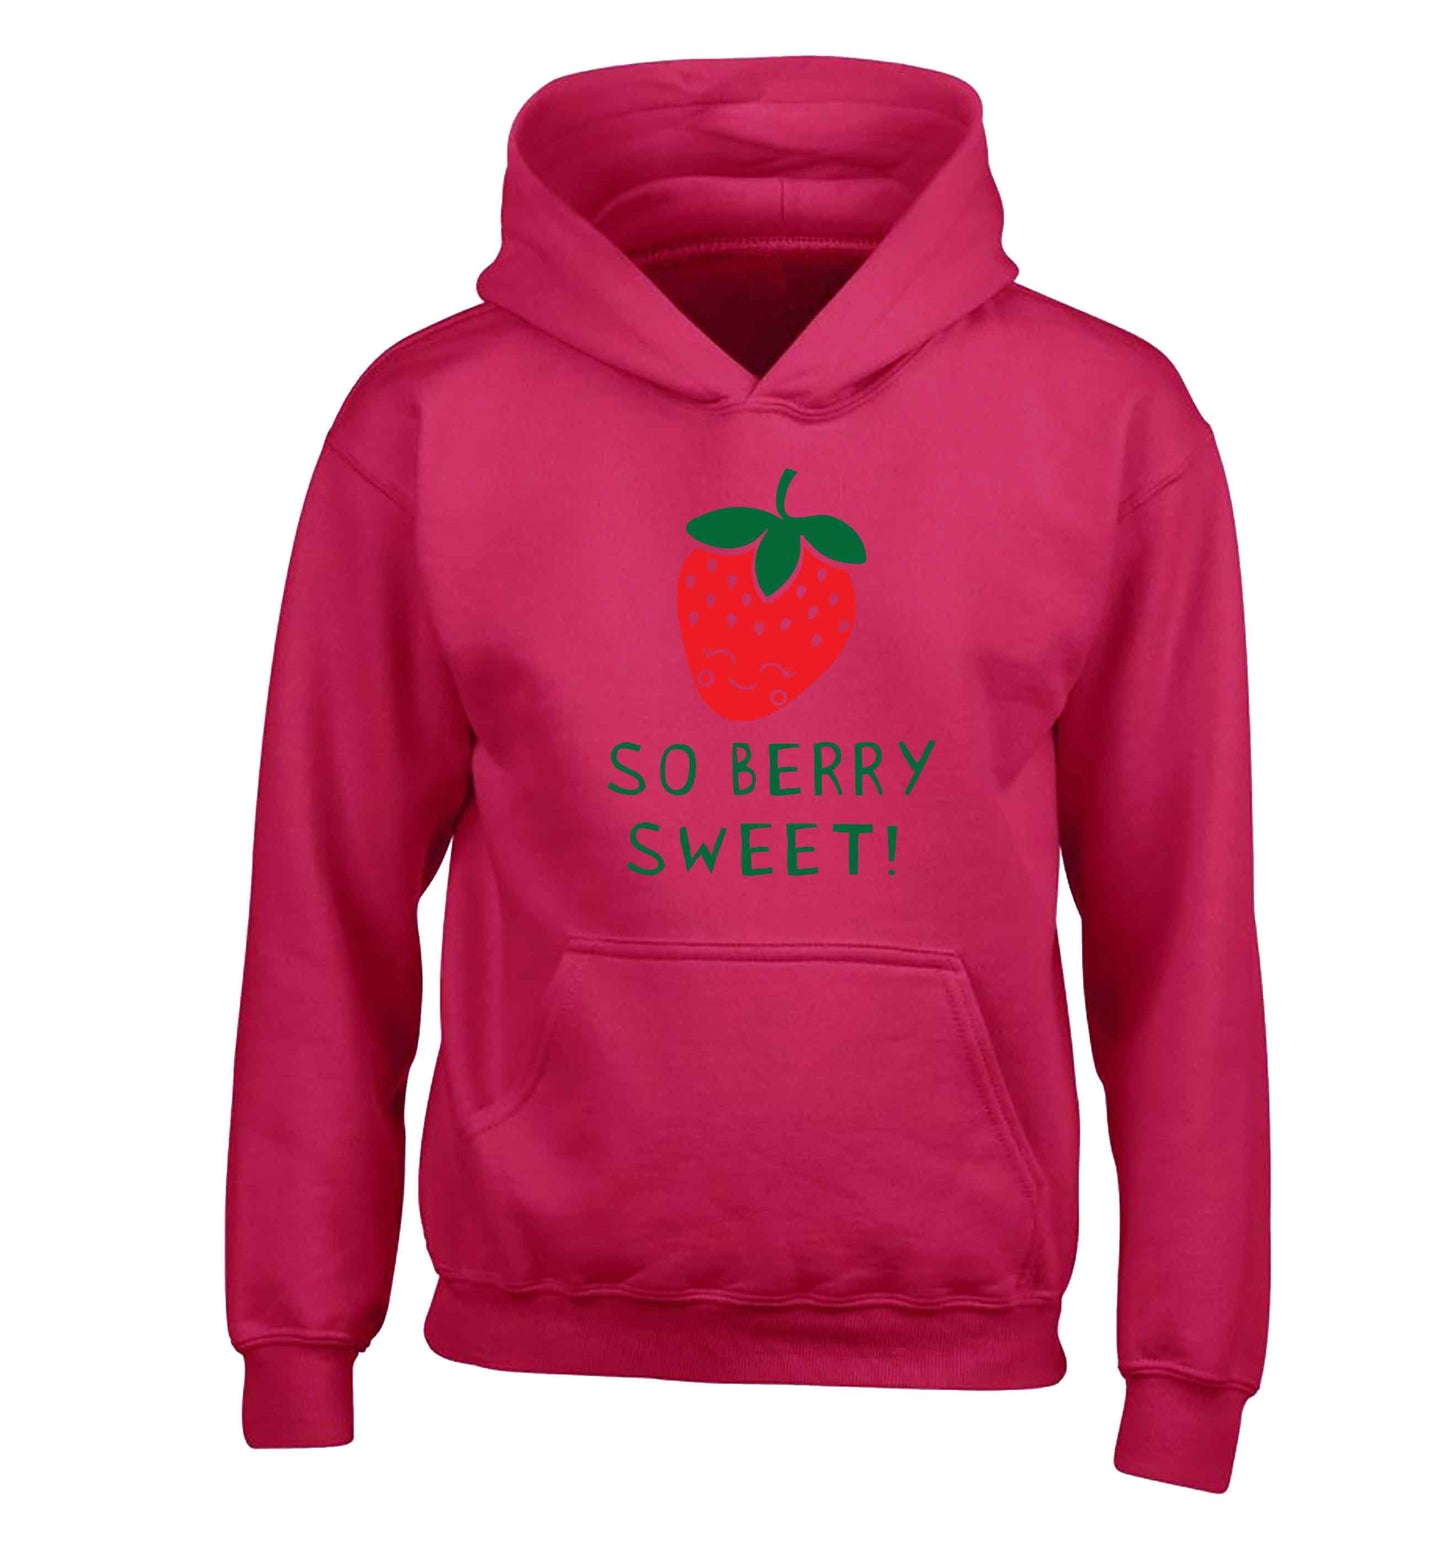 So berry sweet children's pink hoodie 12-13 Years